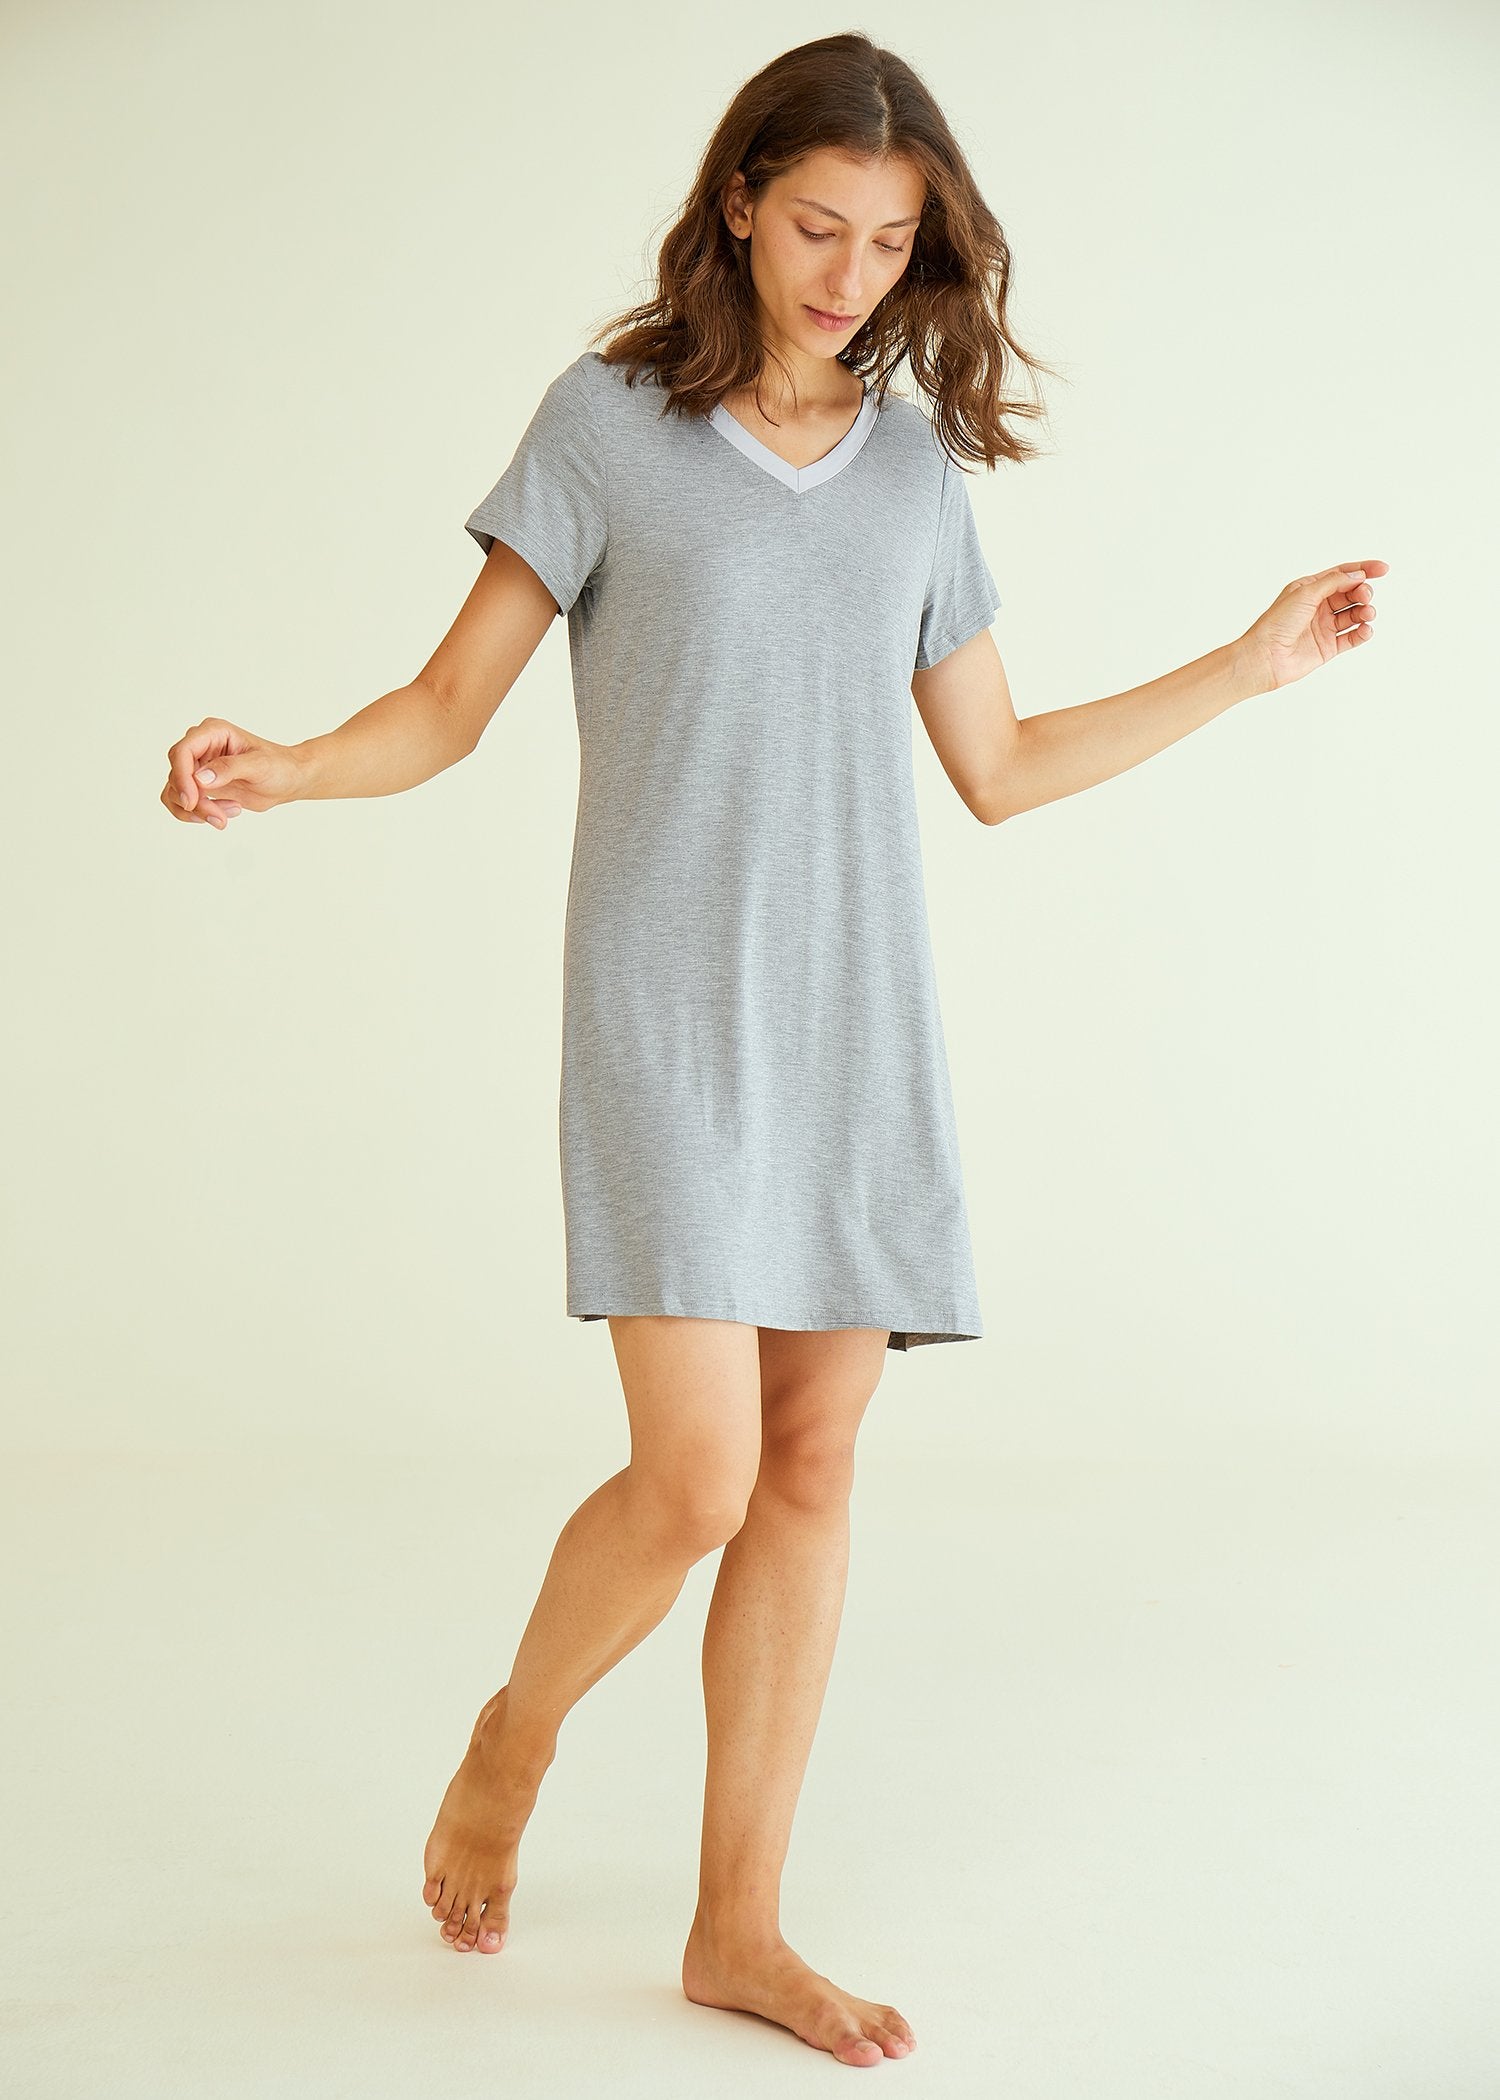 Angelina Women's Modal Button Down Sleep Shirt Dress Pajama (1-Pack)